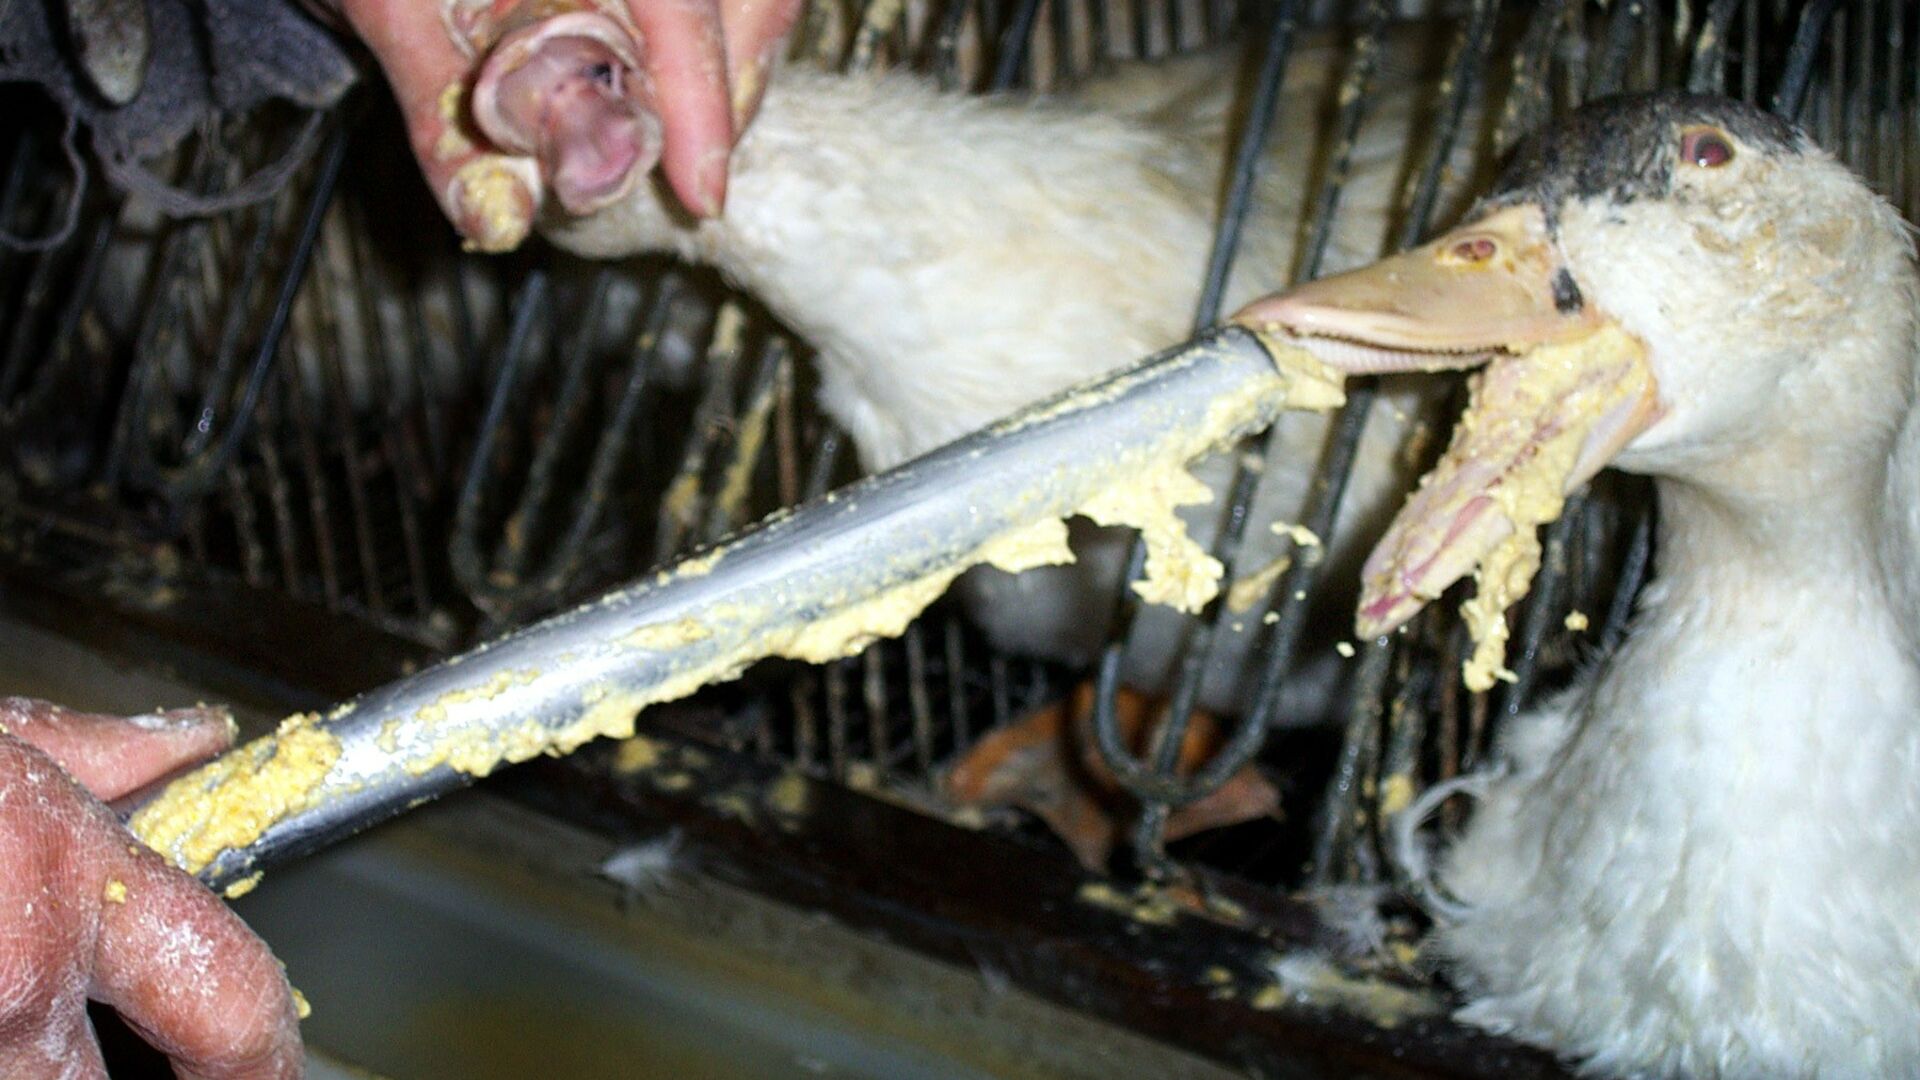 Tvangsfodring i foie gras-produktionen